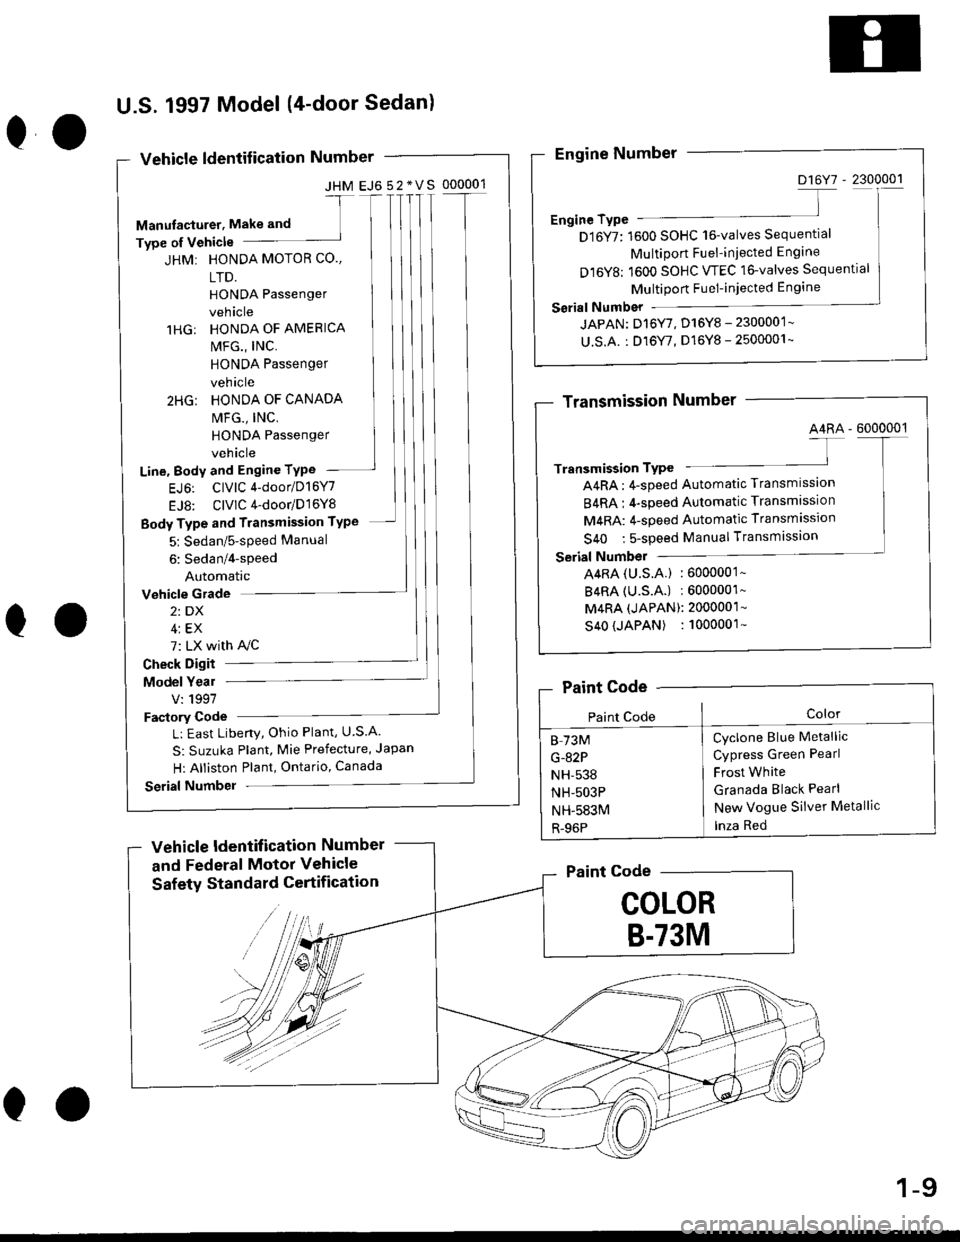 HONDA CIVIC 2000 6.G User Guide 00
U.S. 1997 Model (4-door Sedanl
Vehicle ldentif ication Number
JHM EJ6 52*VS 000001
Manulaqturer. Make and 
-t
Type of Vehicle
HONDA MOTOR CO.,
LTD.
HONDA Passenger
vehicle
HONDA OF AMERICA
MFG., IN